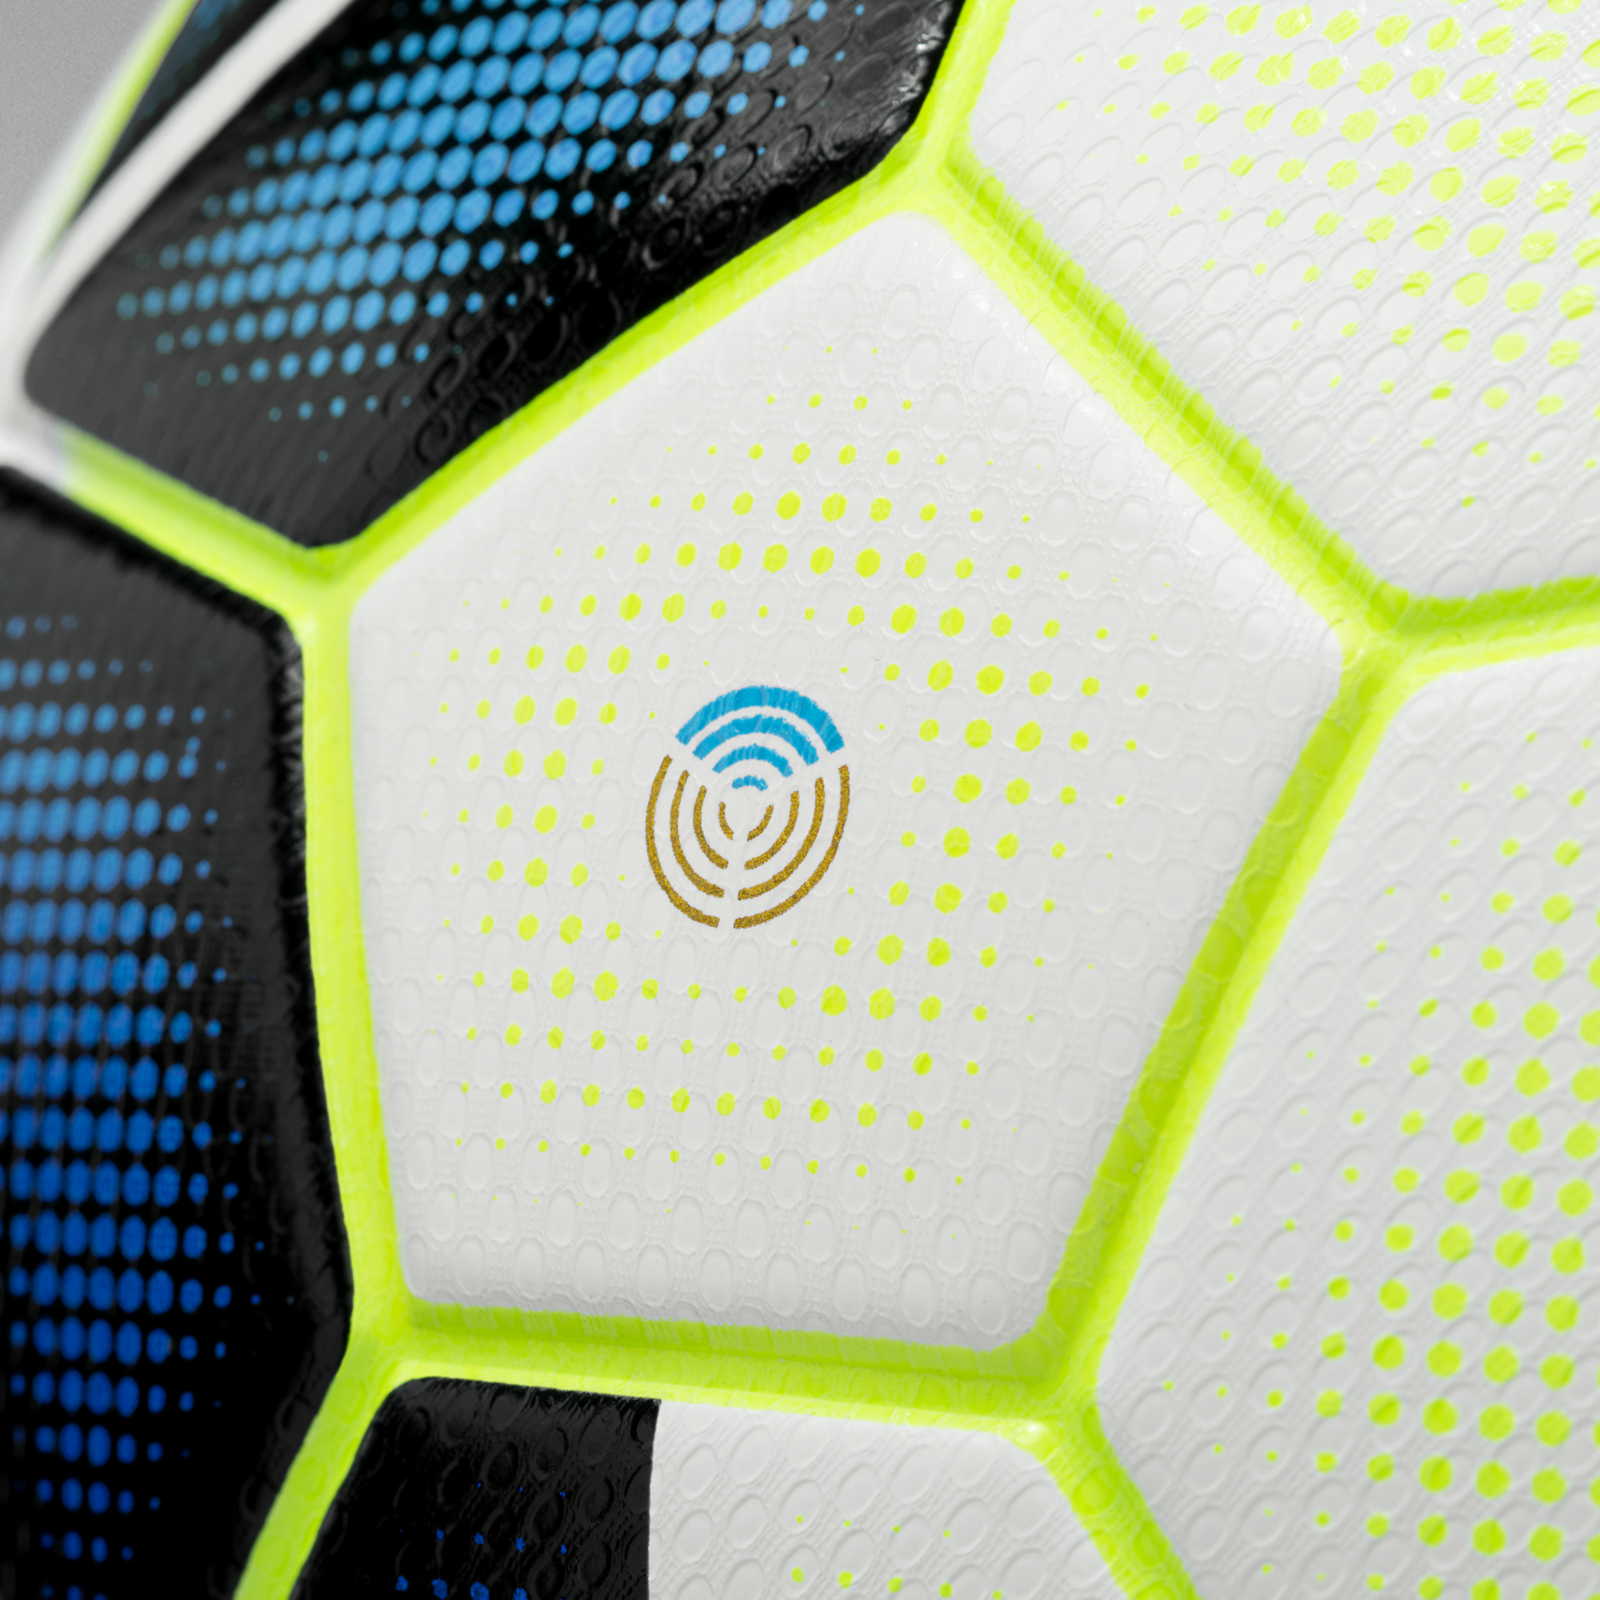 Nike Ordem 14-15 Premier League Ball Released - Footy Headlines